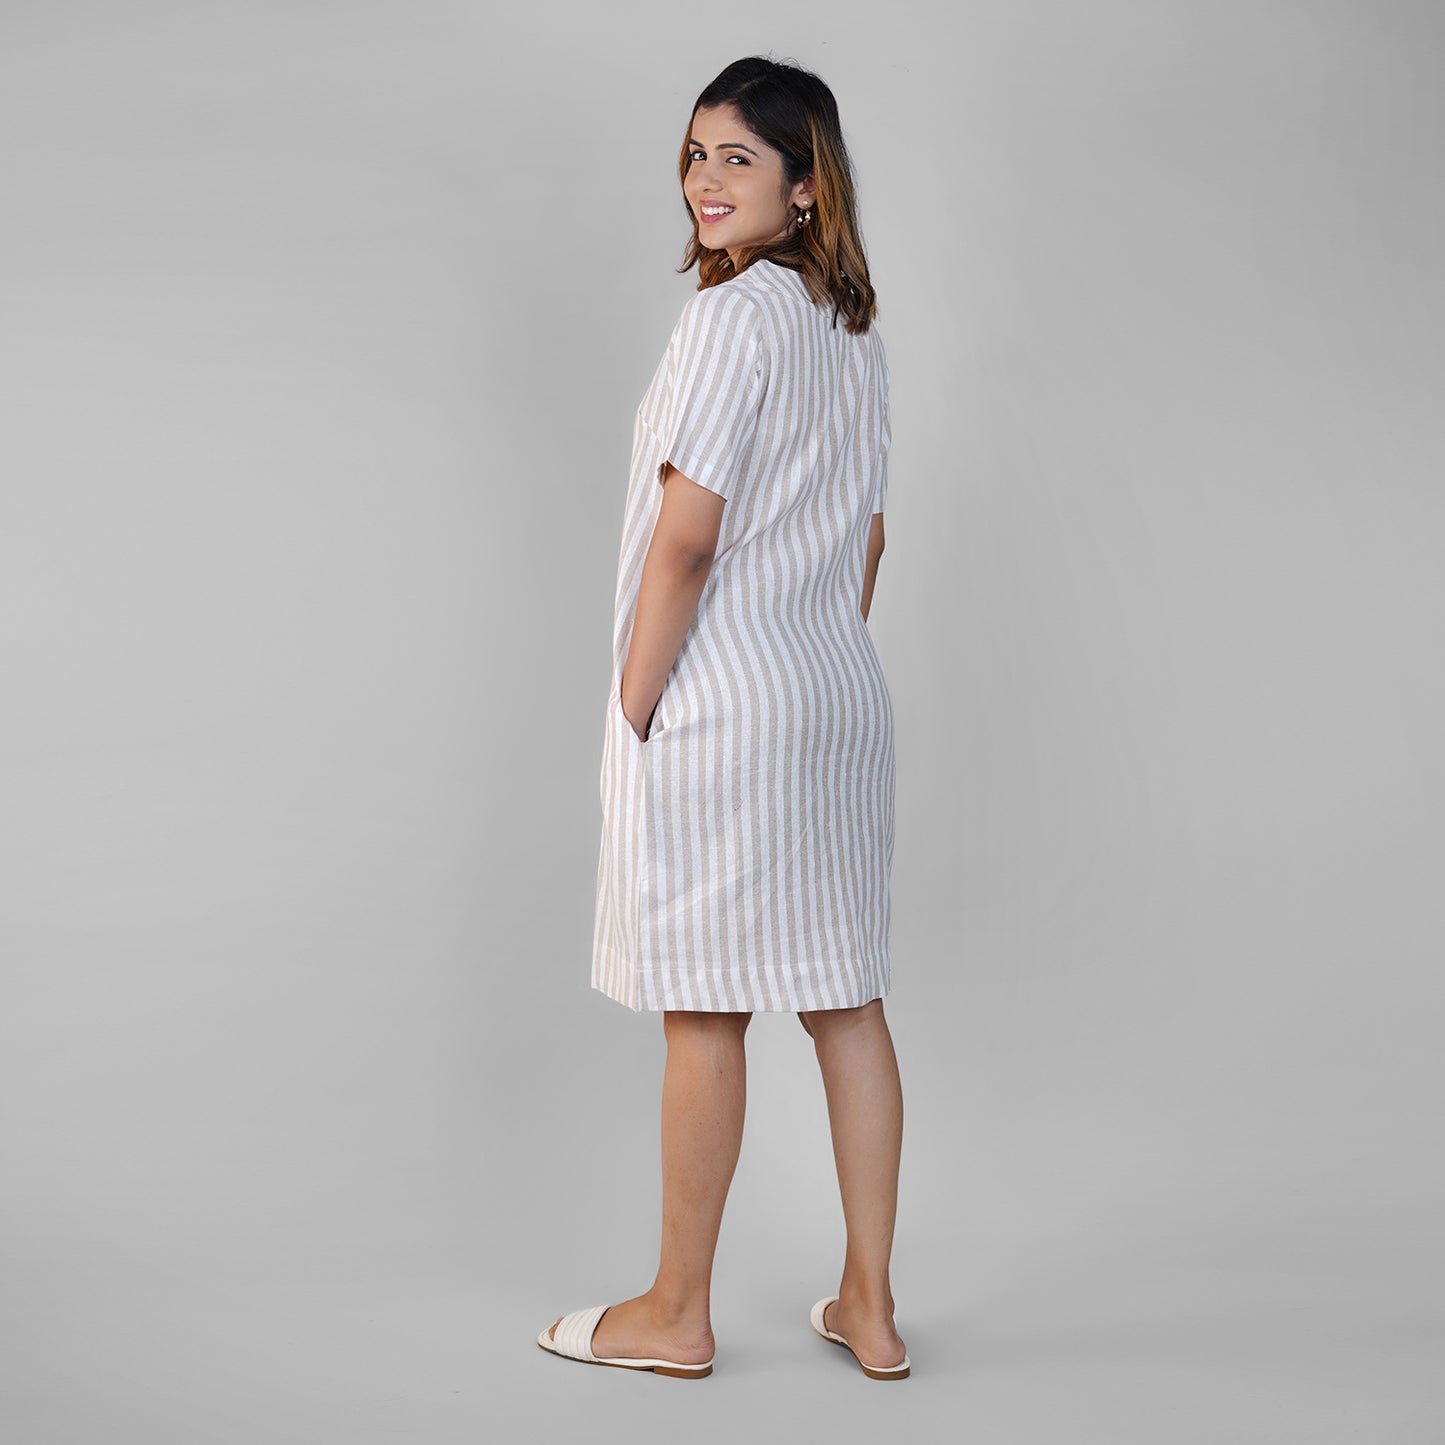 White & Beige Striped Linen A-Line Dress for Women